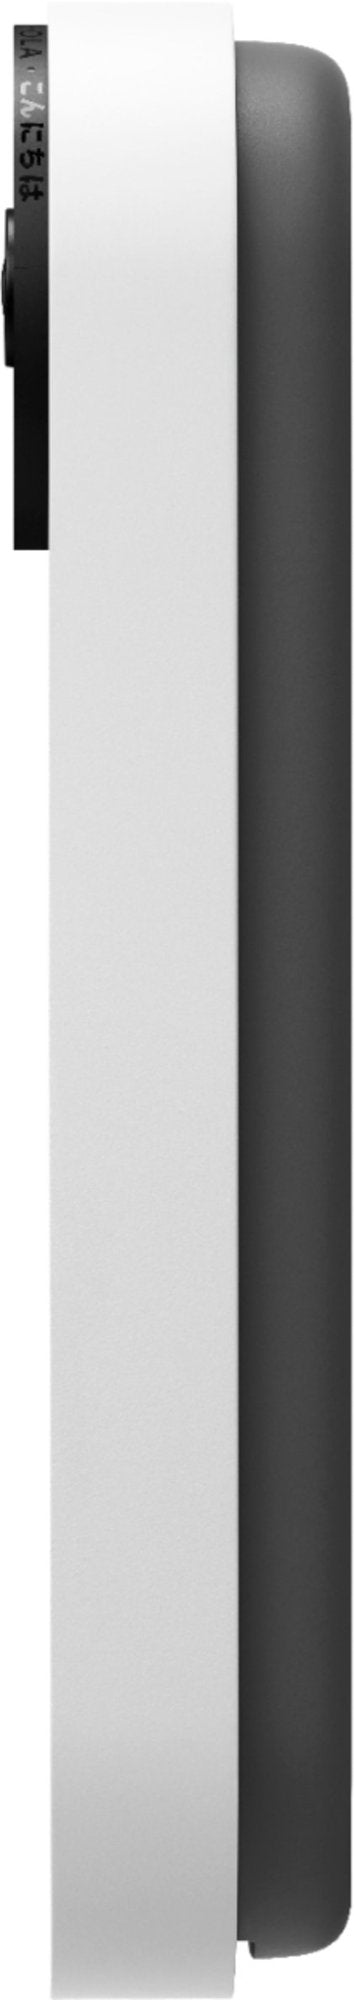 Nest Doorbell (Battery) Smart Wi-Fi Video Doorbell Camera - Snow (Pre-Owned)